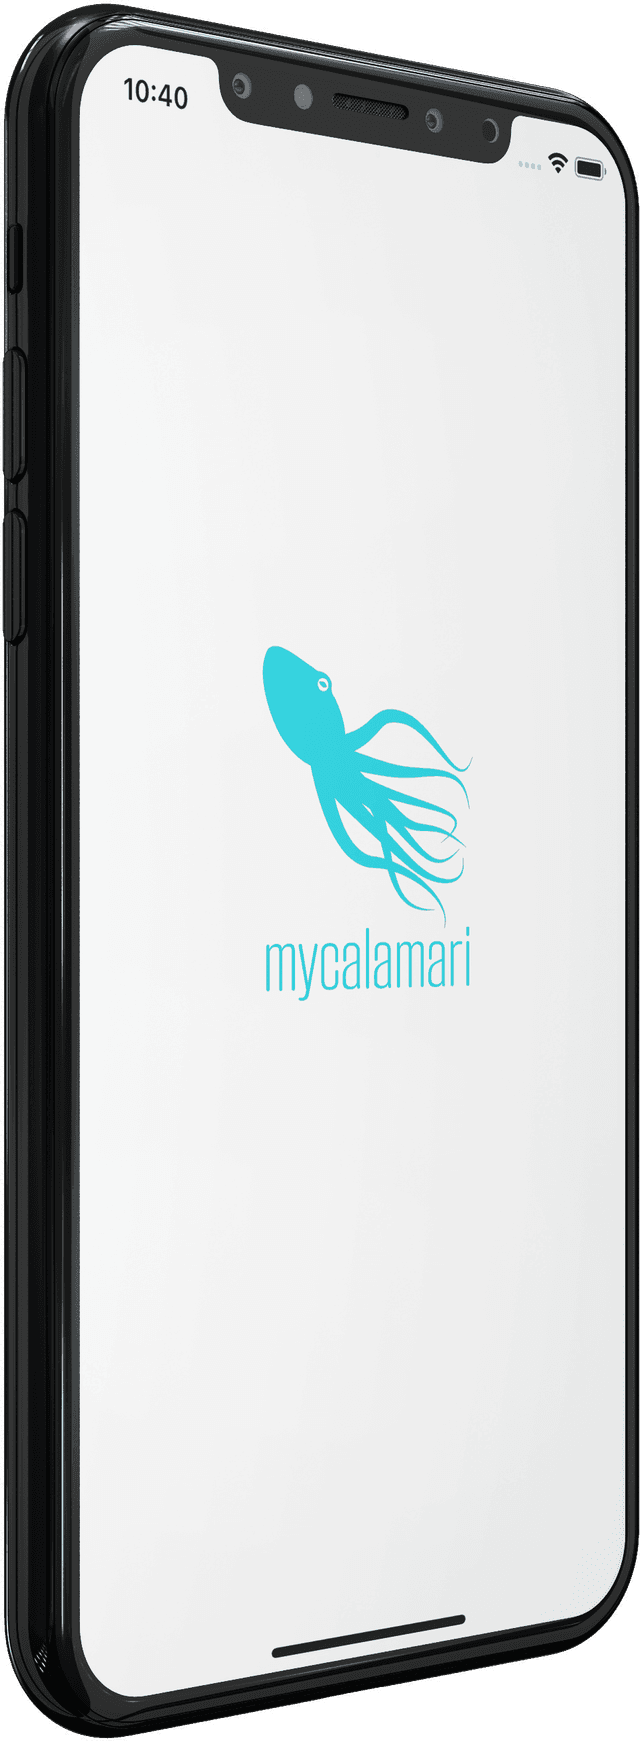 MyCalamari - 1